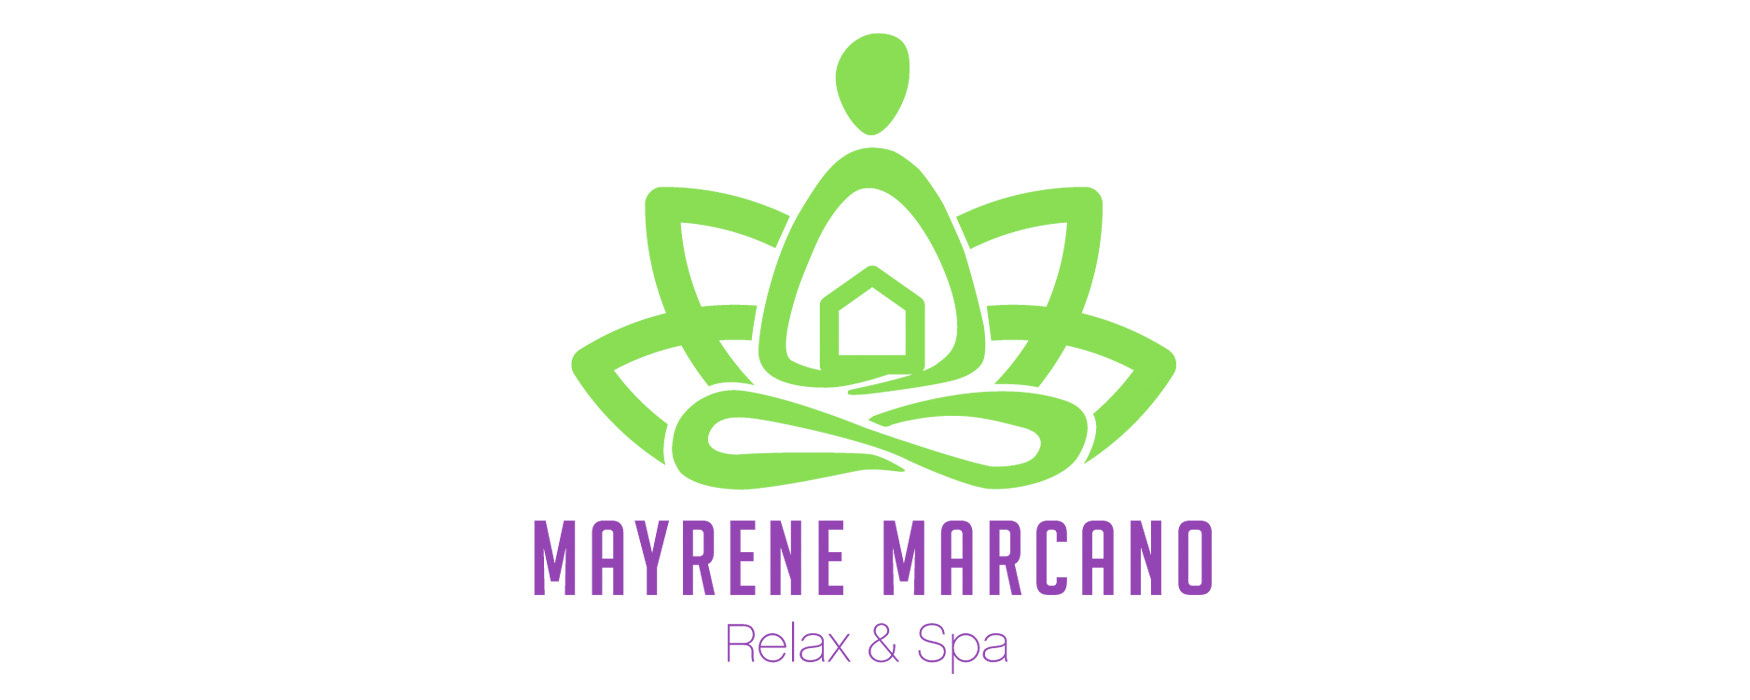 Mayrene Marcano Relax & Spa